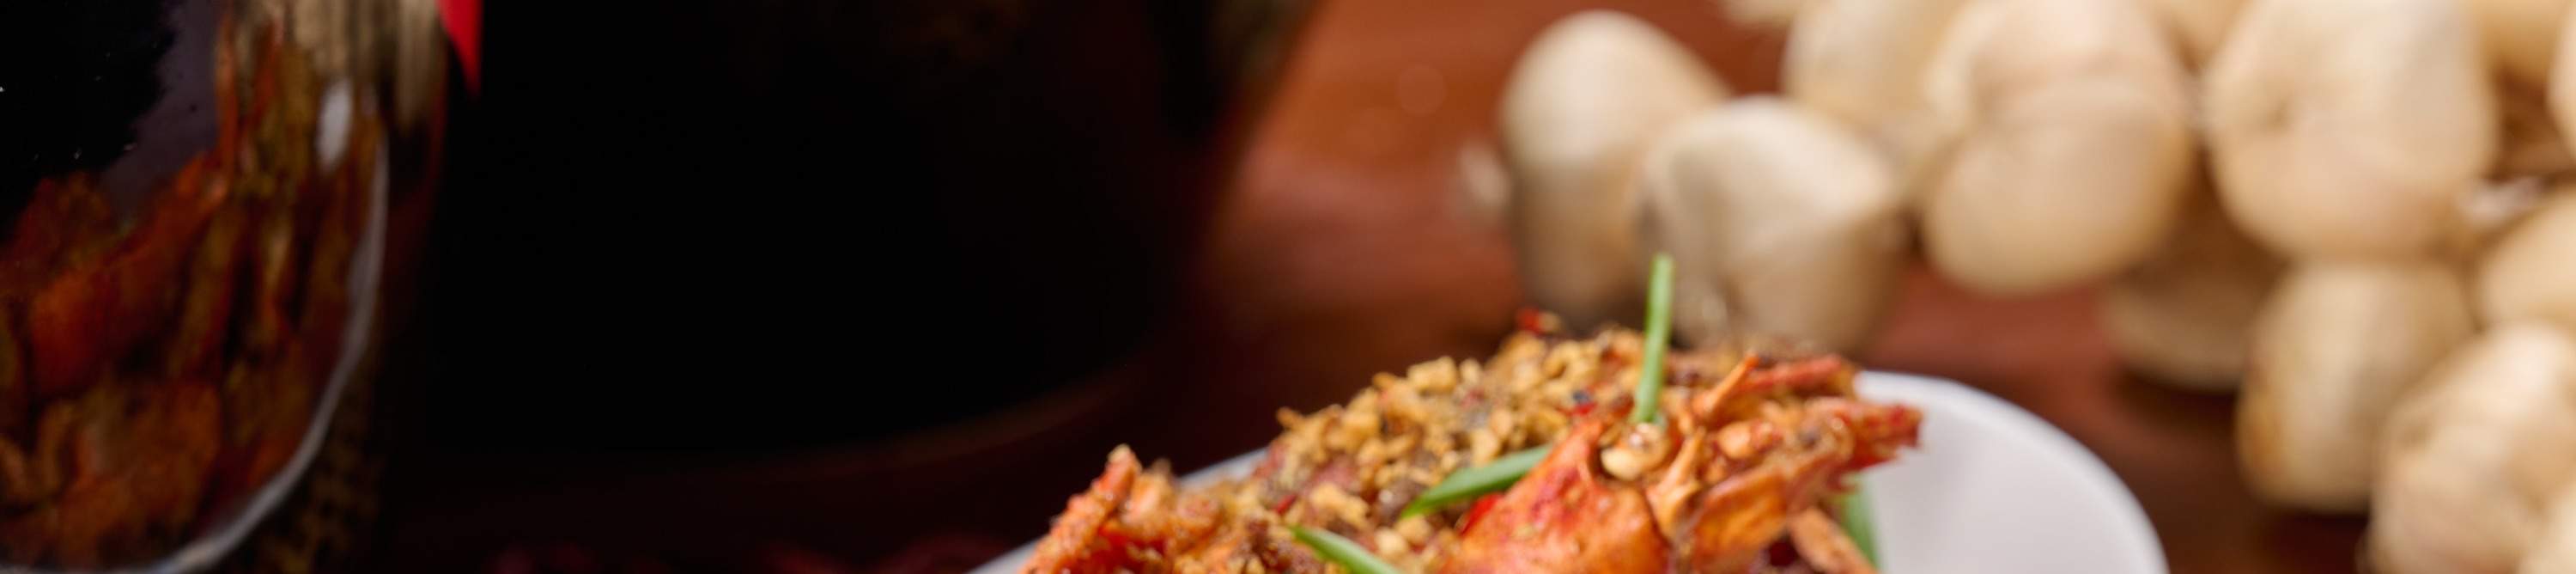 Hyatt Tst - Cafe Wok Fried Lobster, Chilli and Garlic Crumbles